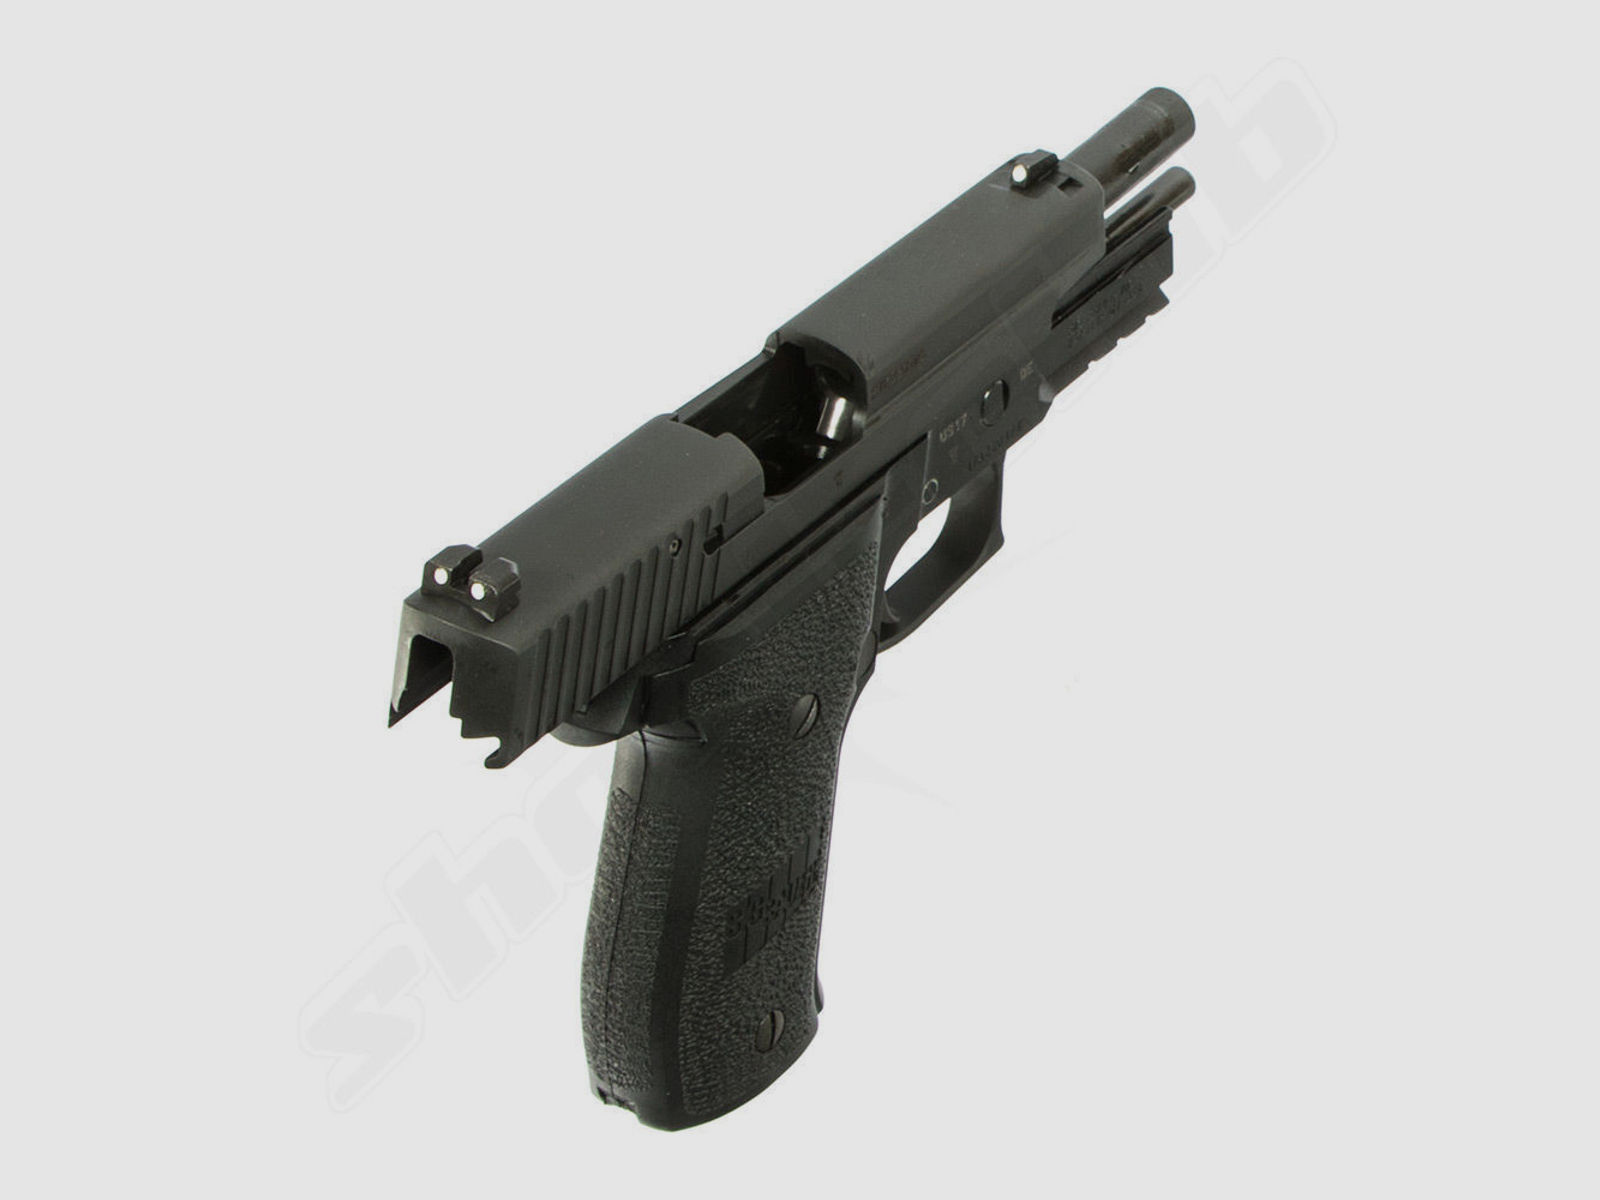 Sig Sauer P226 MK25 im Kaliber 9mm Luger